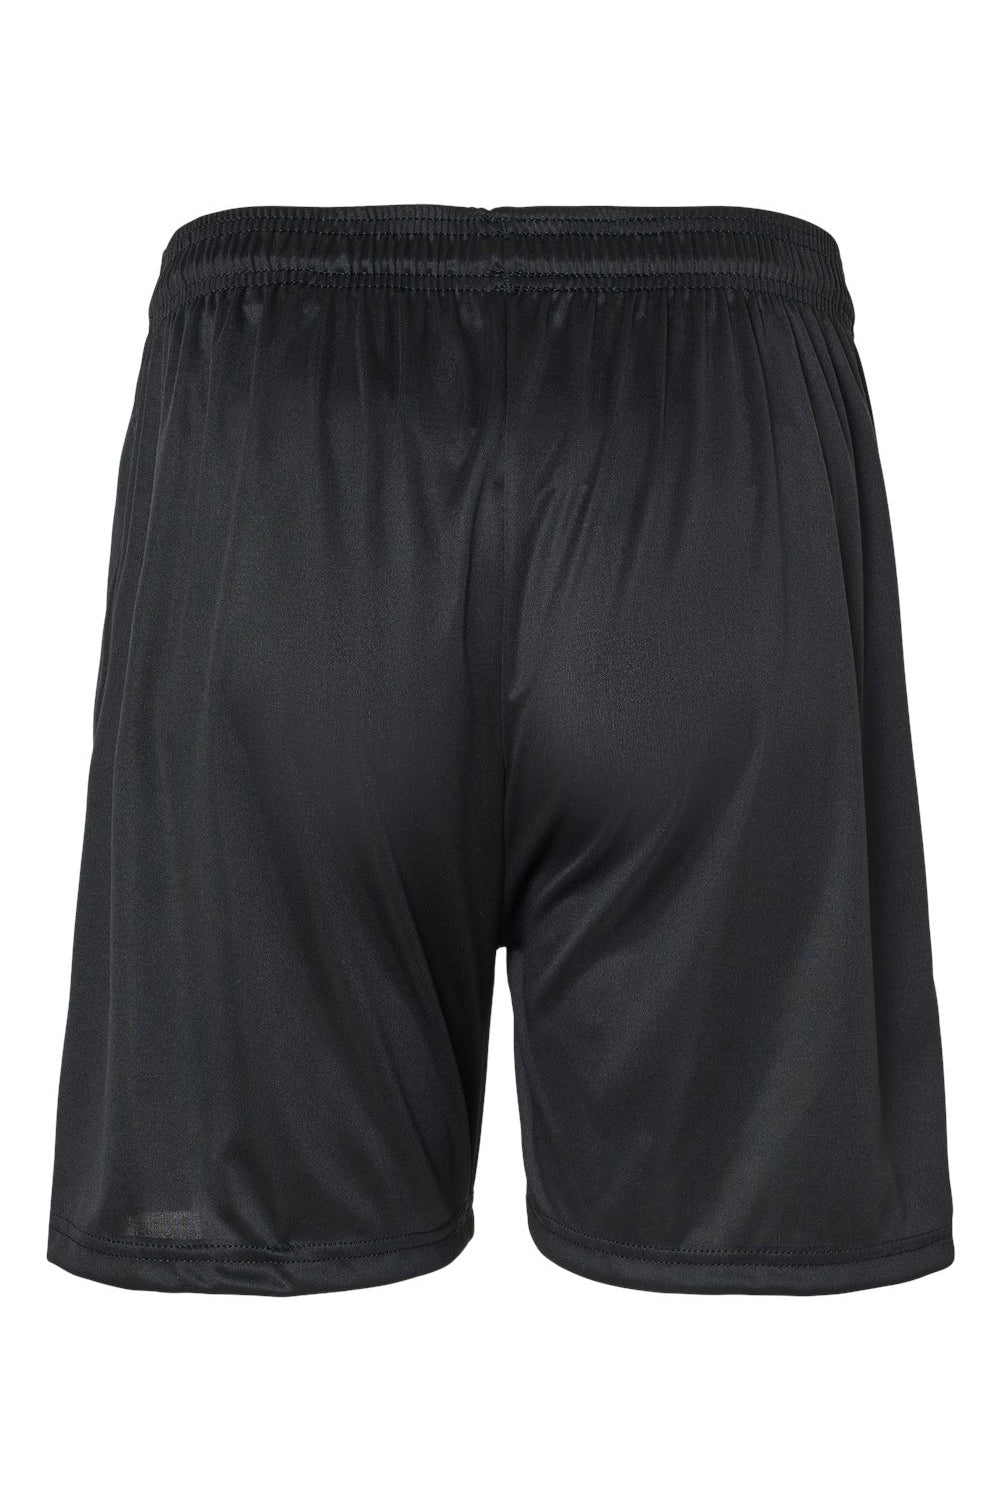 Badger 4146 Mens B-Core Moisture Wicking Shorts w/ Pockets Black Flat Back